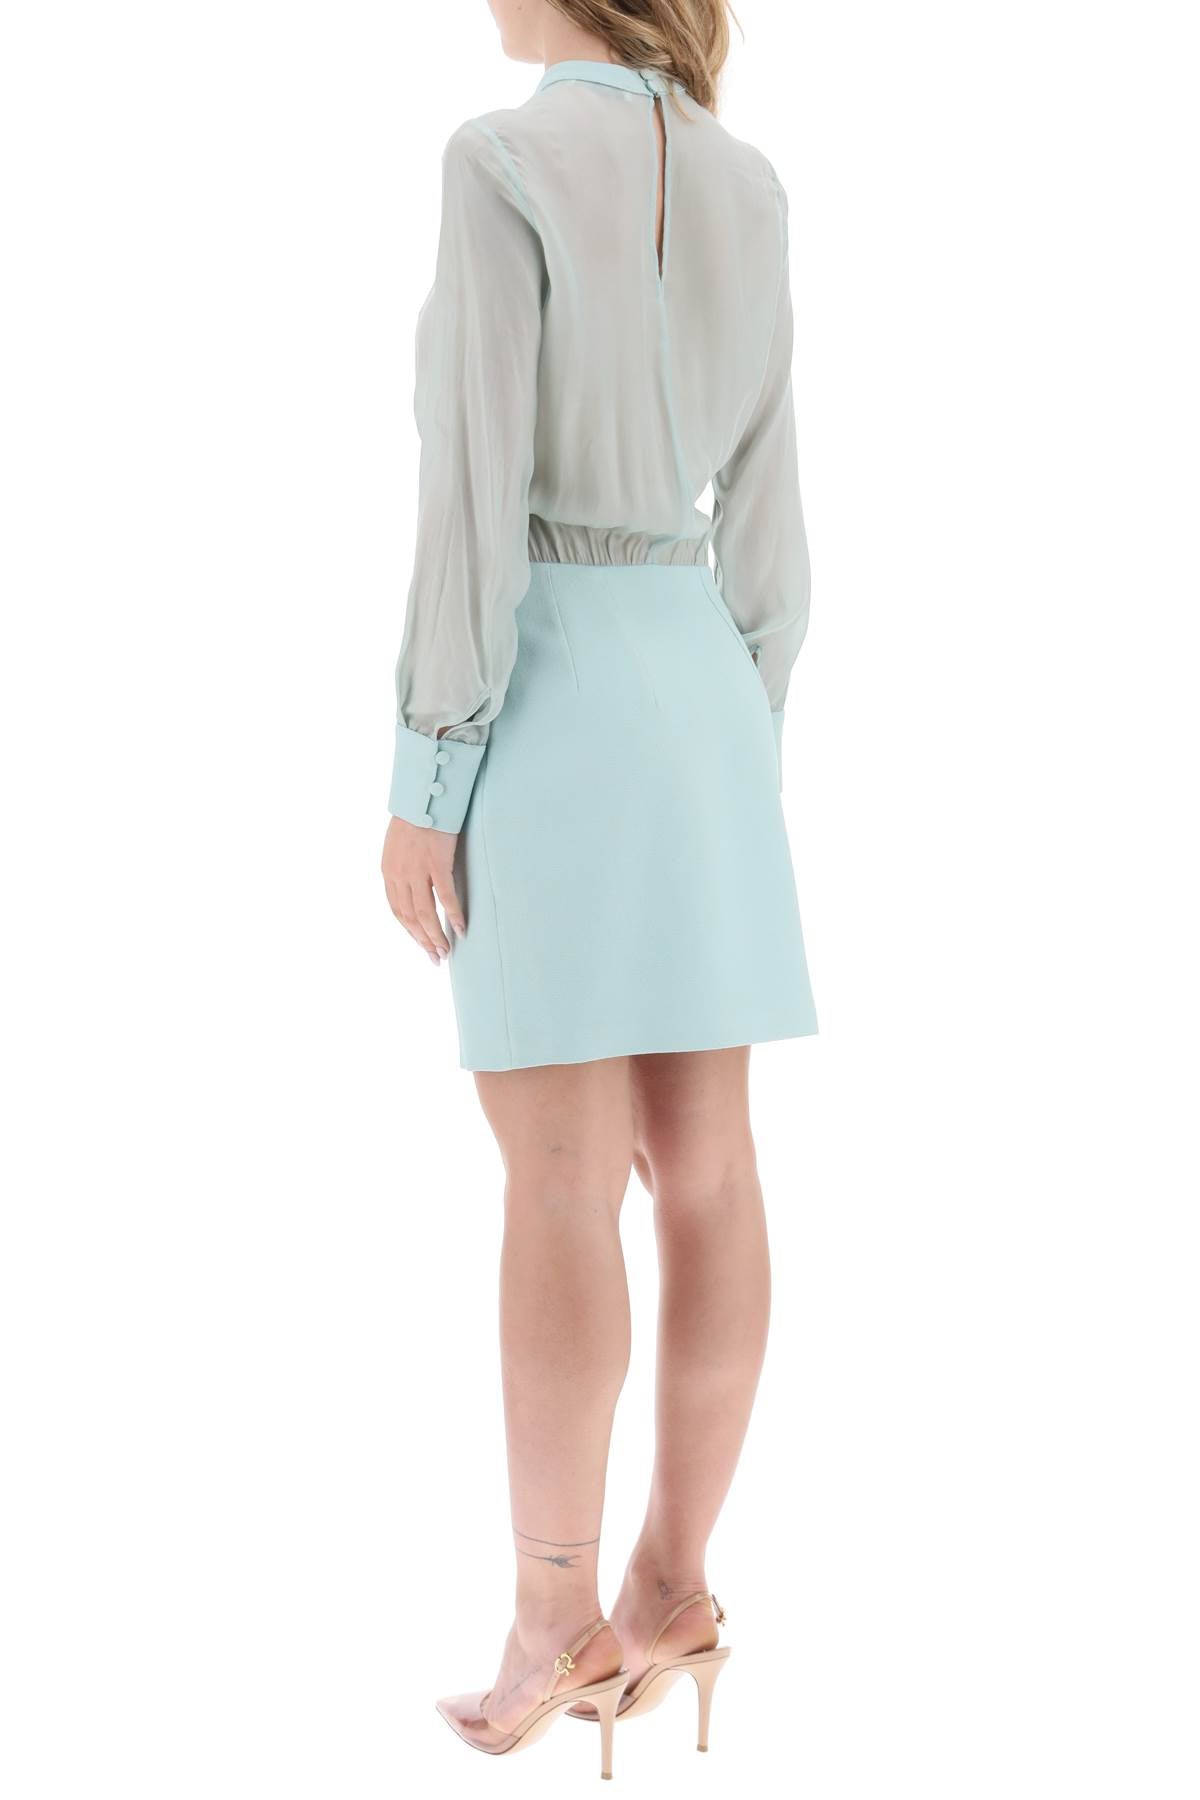 Mvp wardrobe 'plaza' long-sleeved dress-2